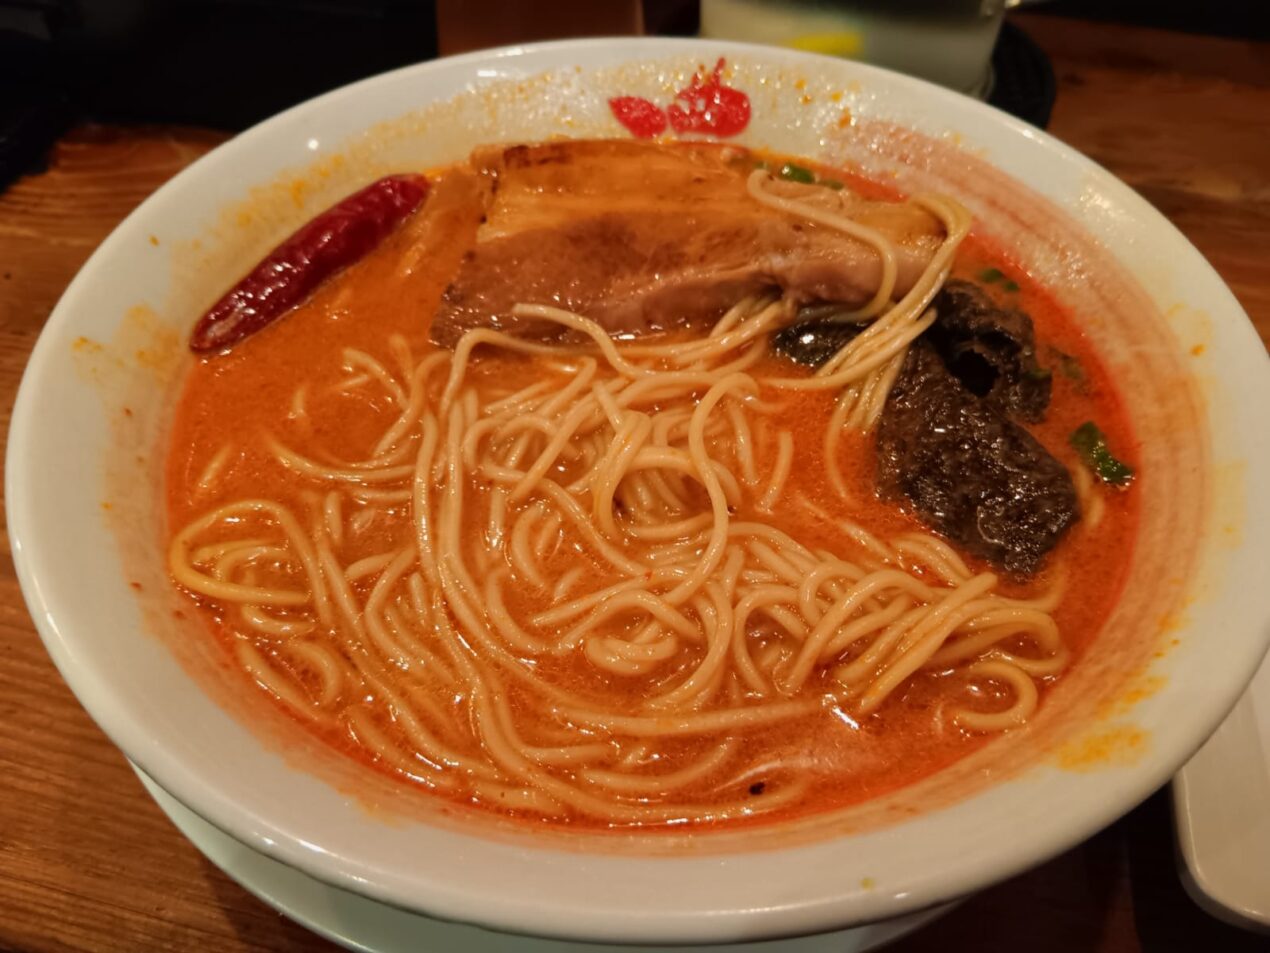 Ramen Bari-Uma in Hong Kong's spicy tonkotsu ramen